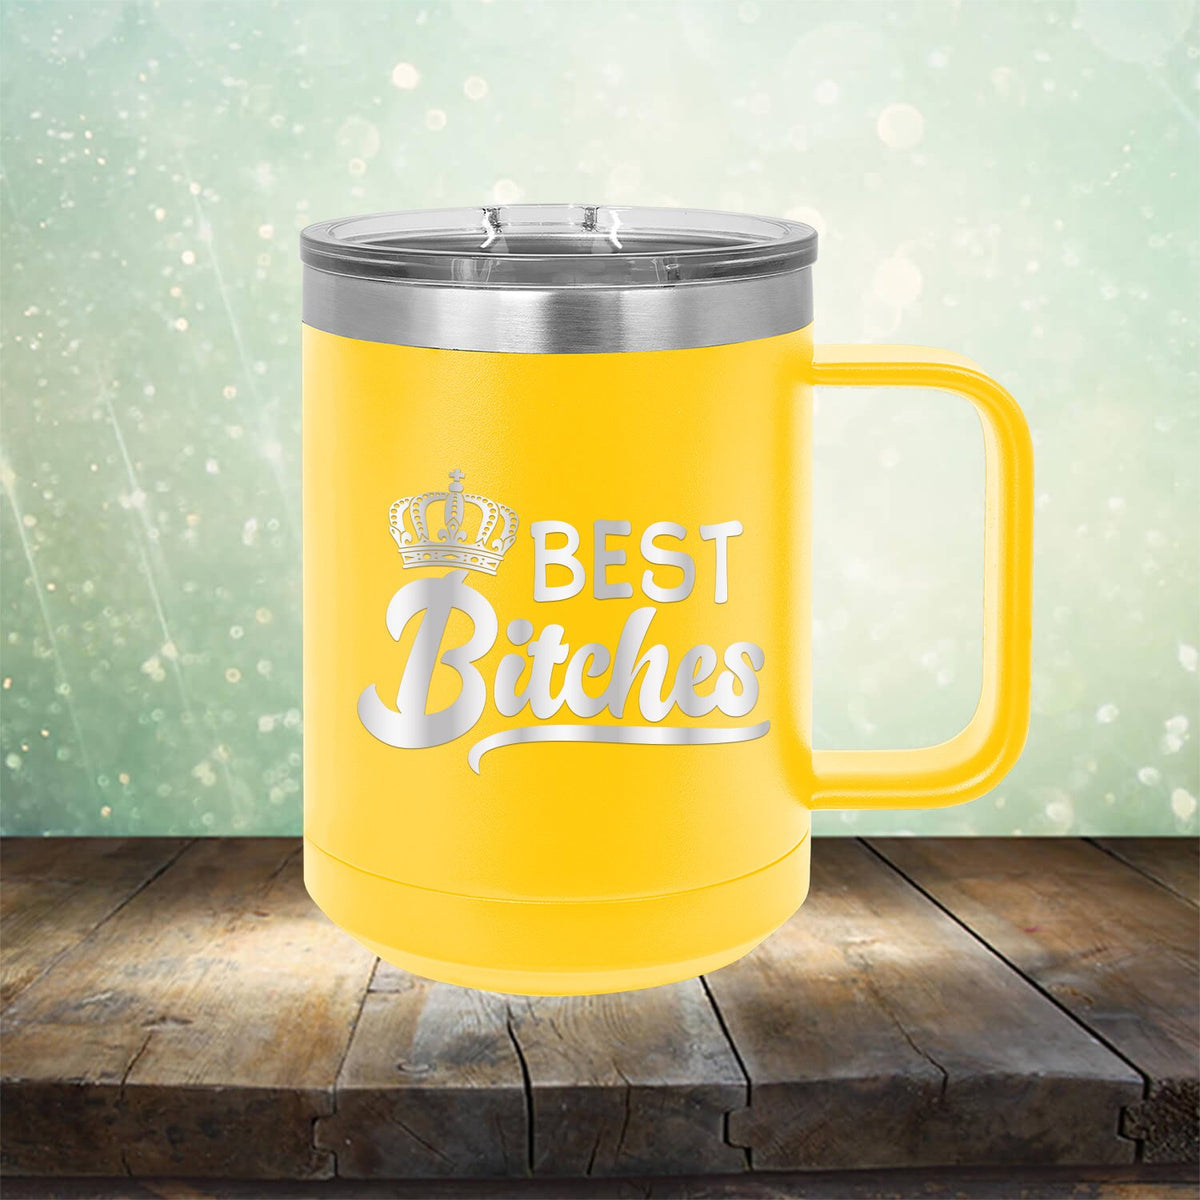 Best Bitches - Laser Etched Tumbler Mug